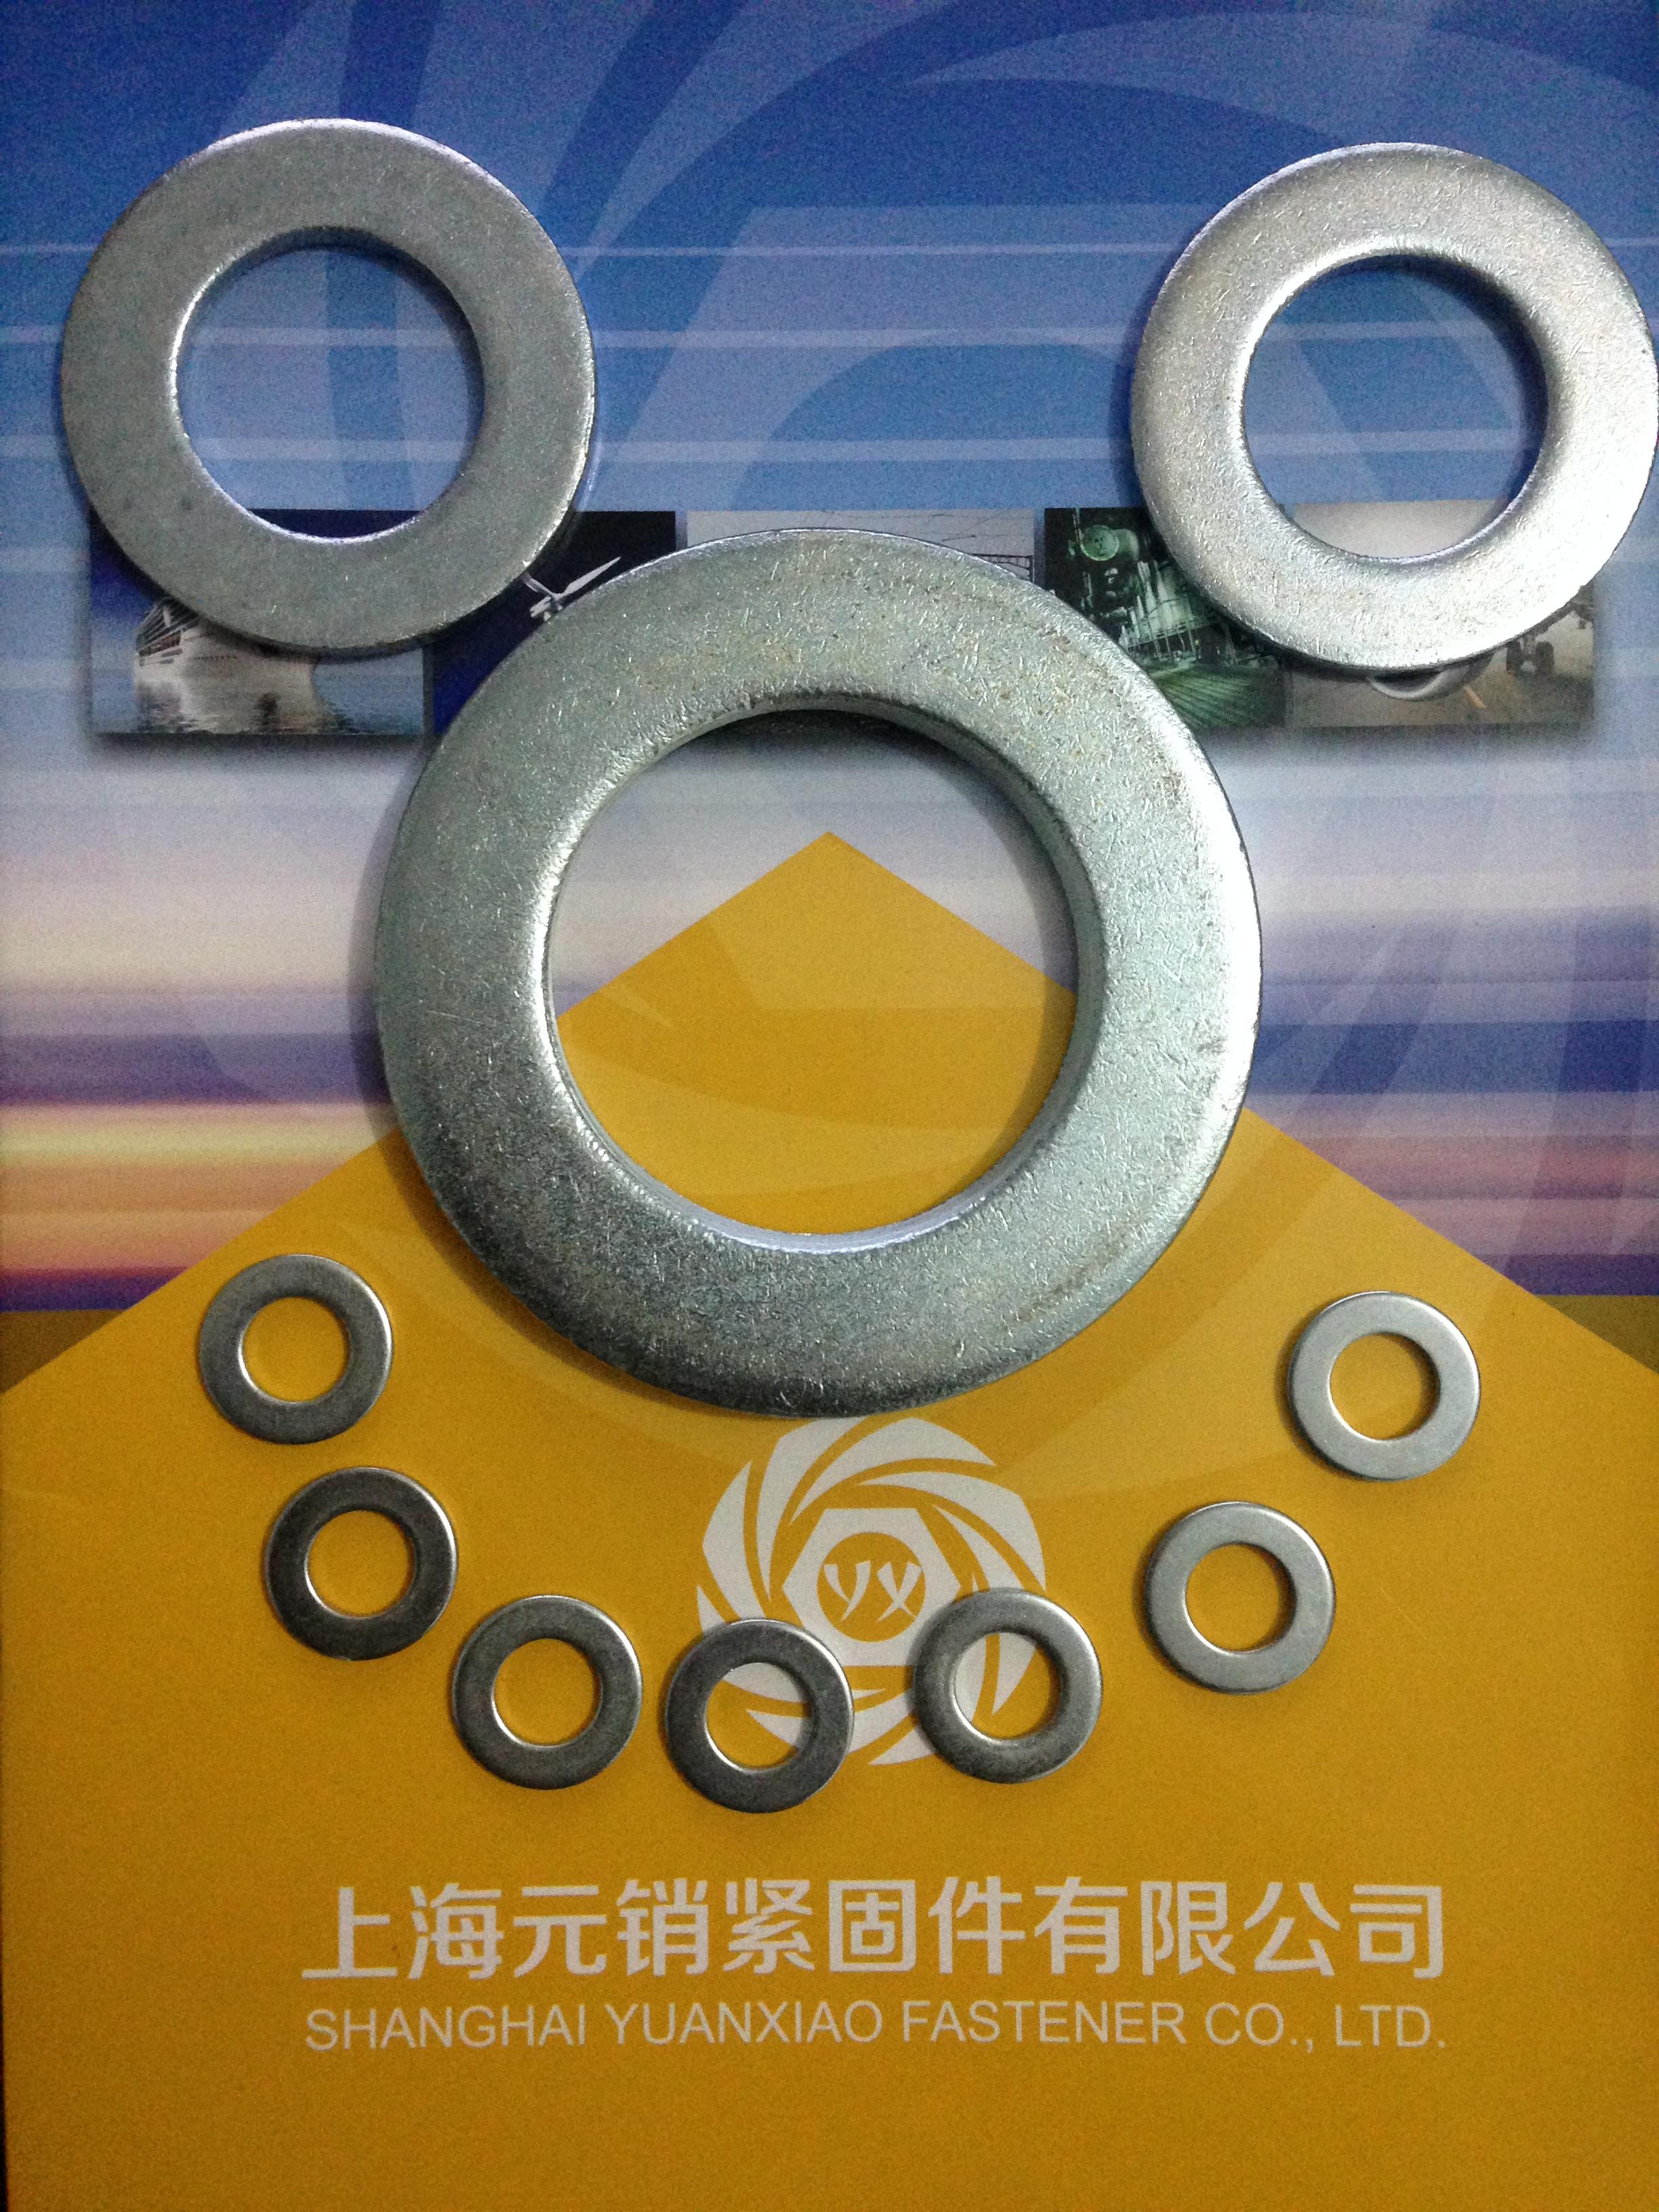 JB机械行业标准 4080 - 2006 【高强度螺栓专用垫圈】